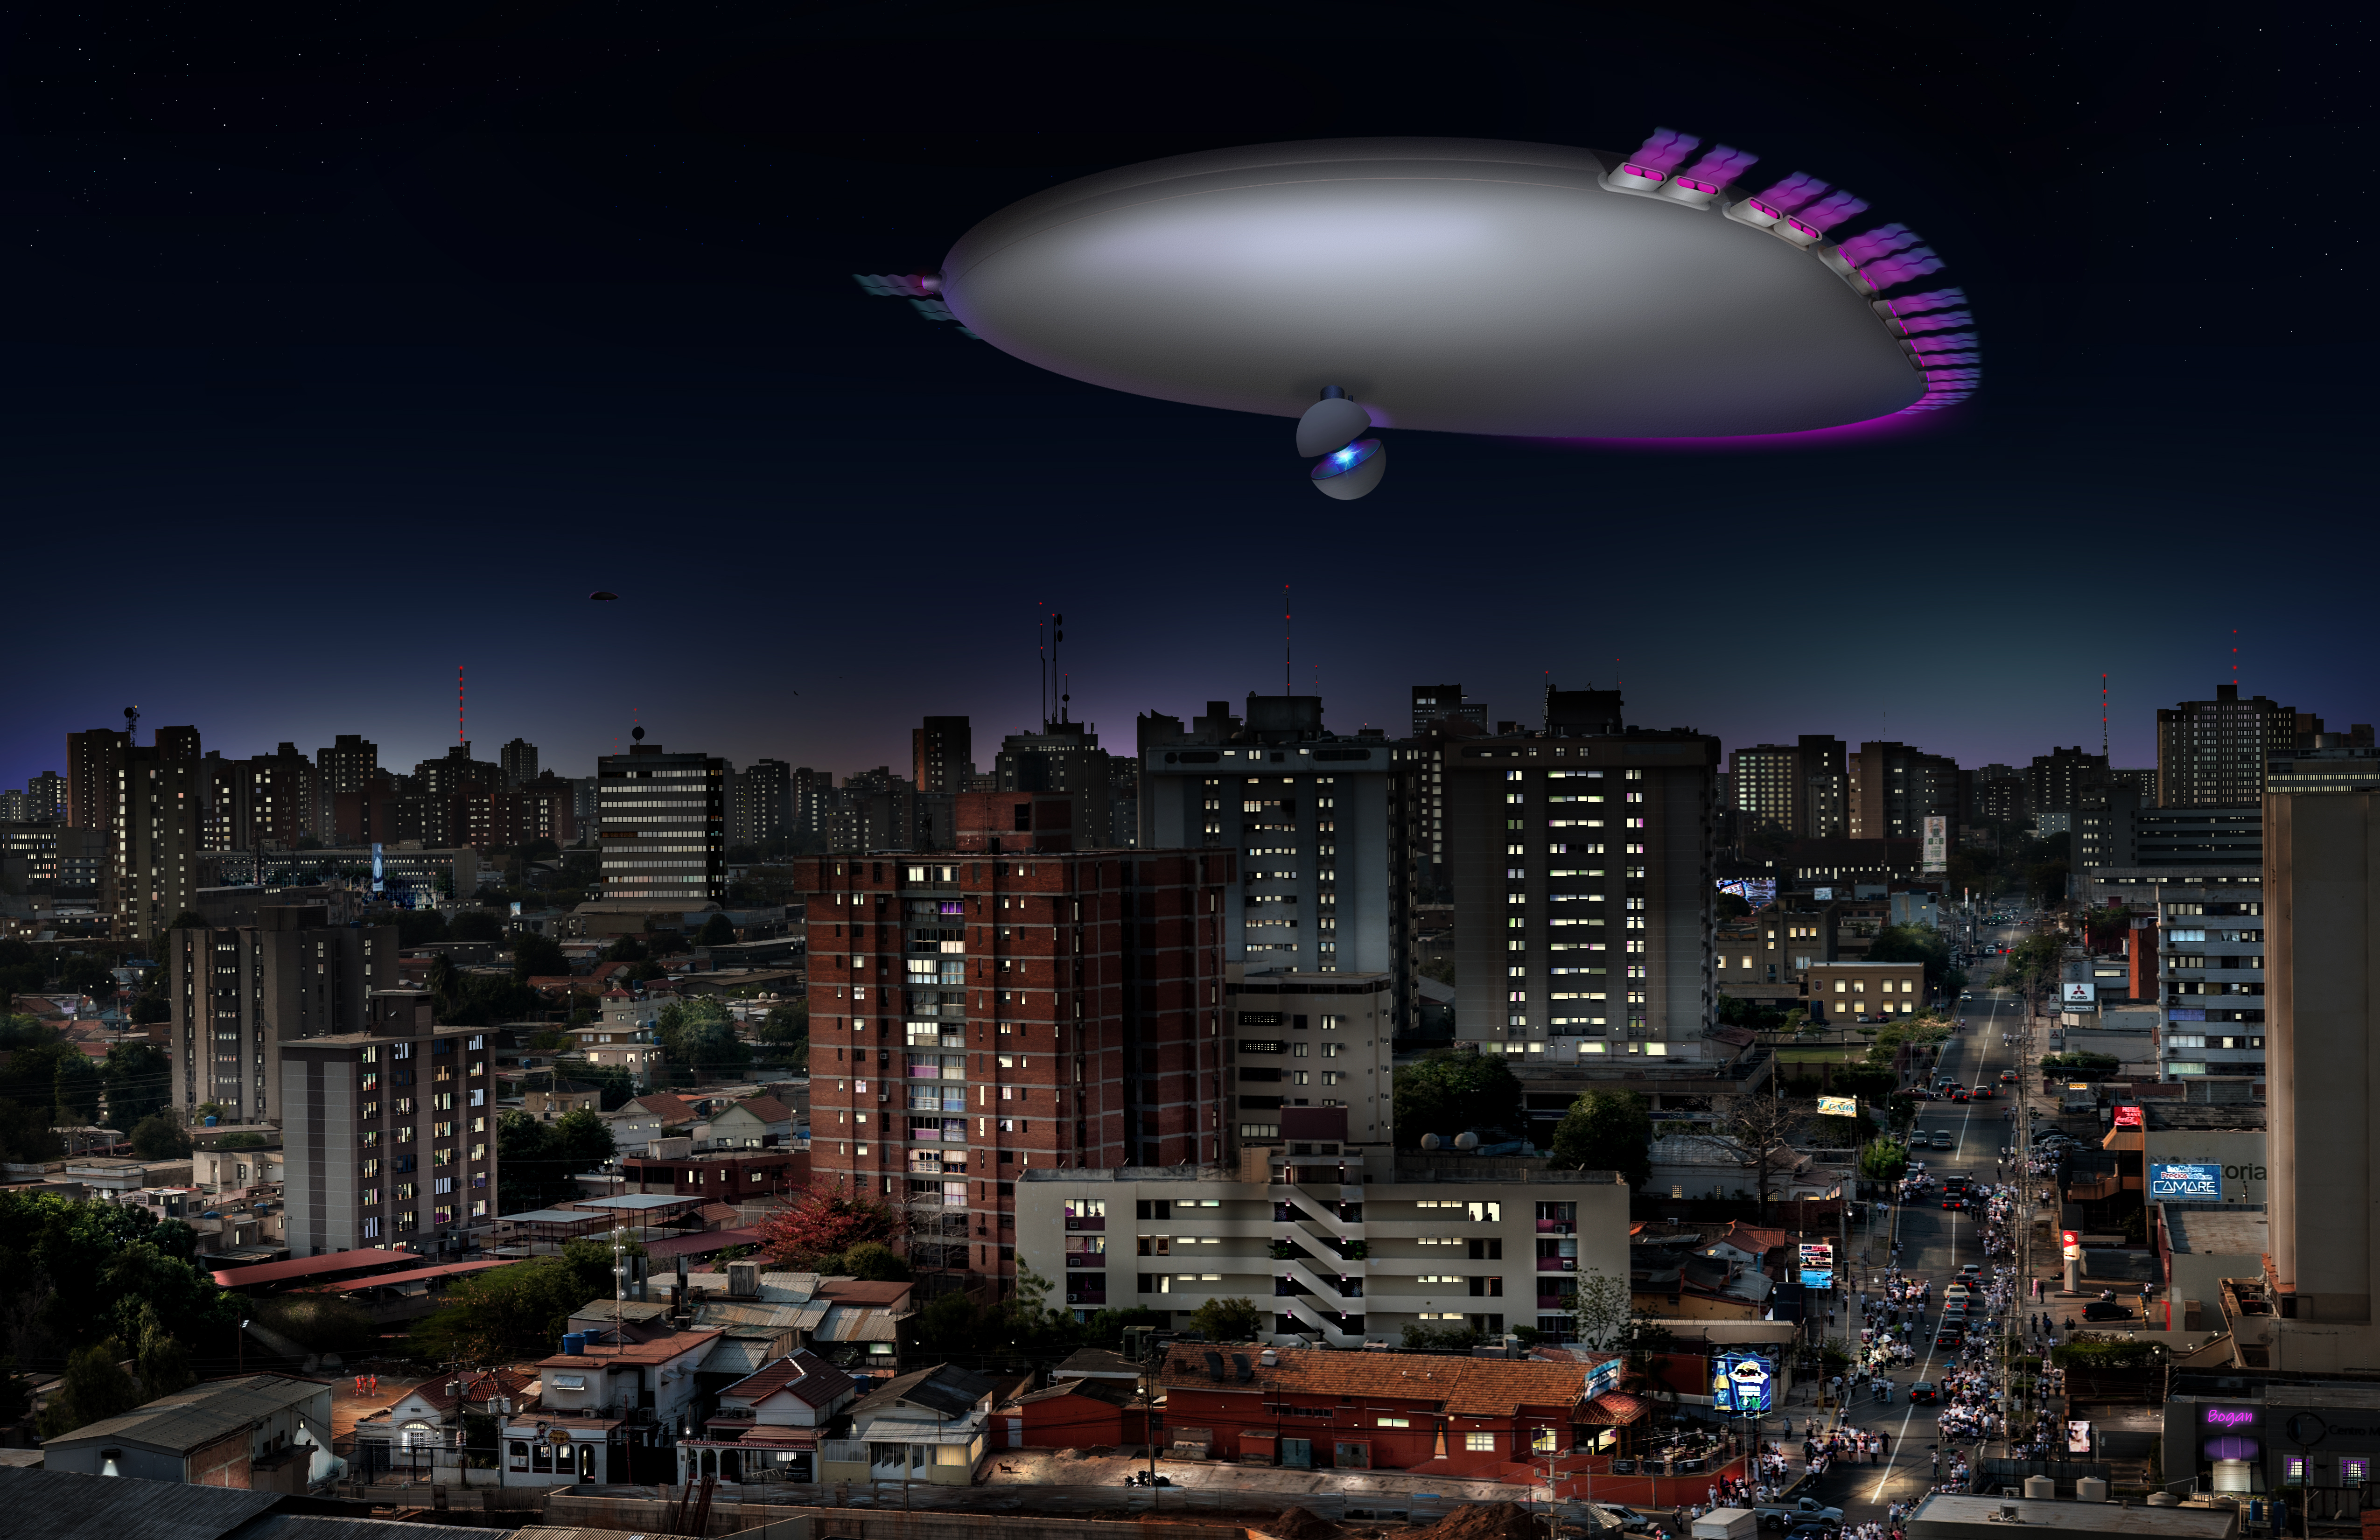 //www.projectblueroom.com/wp-content/uploads/2019/07/Maracaibo_1-1972-Object-described.jpg